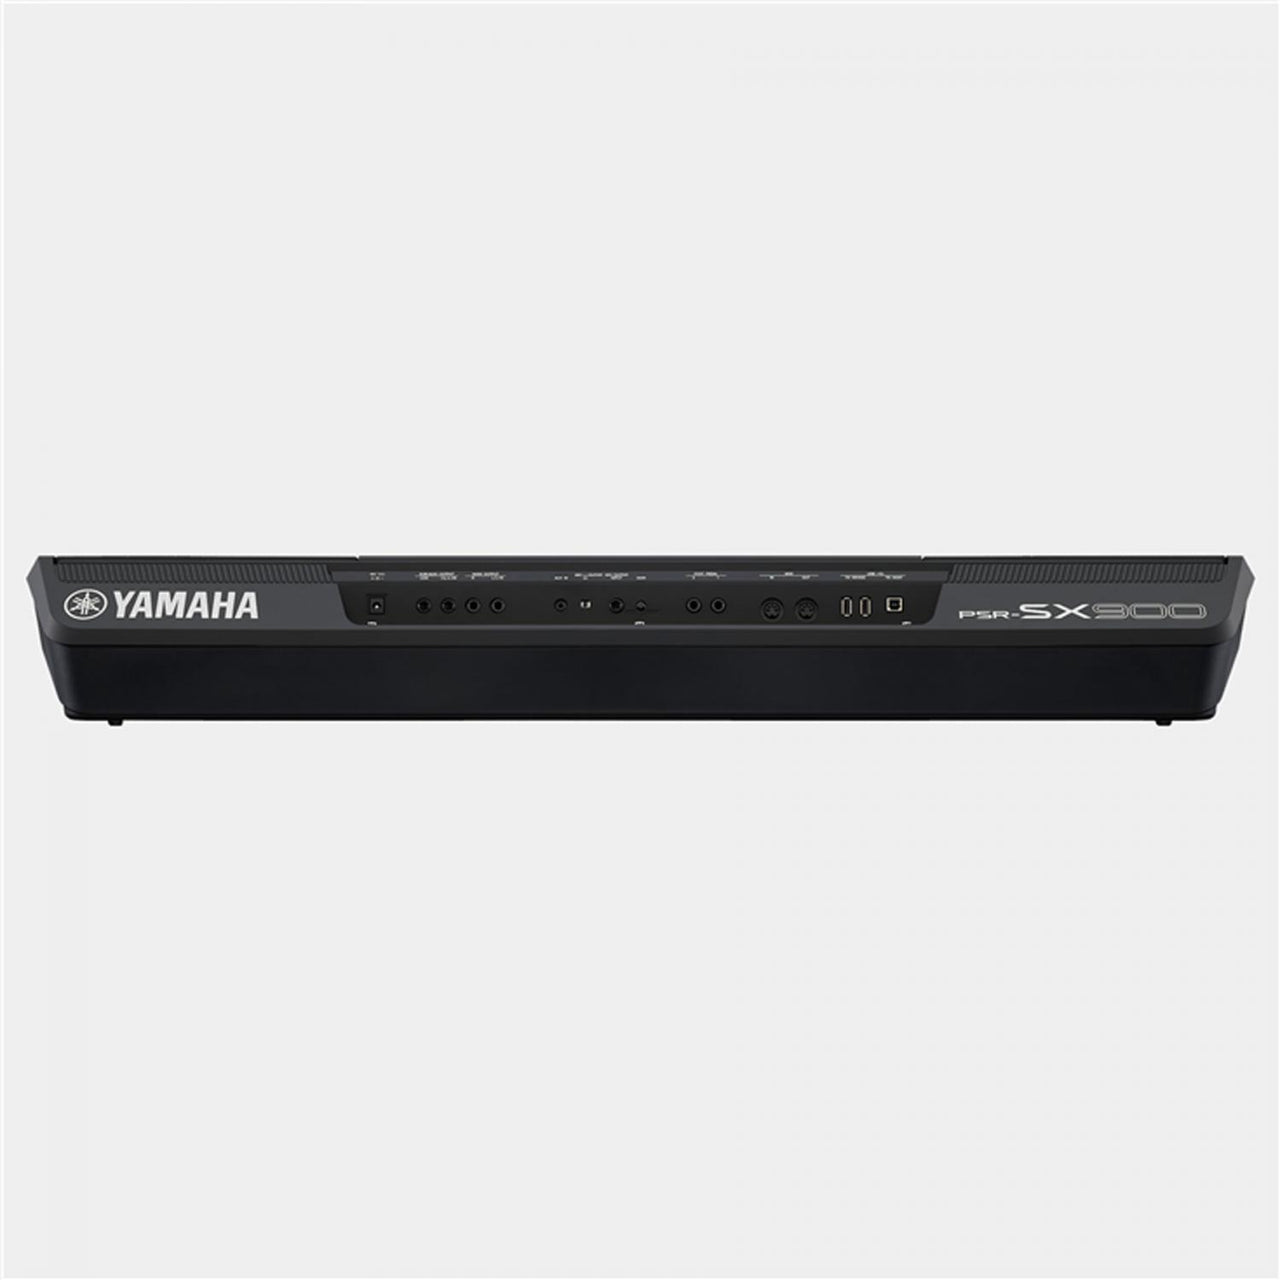 Teclado portatil yamaha profesional c/eliminador pa300c, PSR-SX900